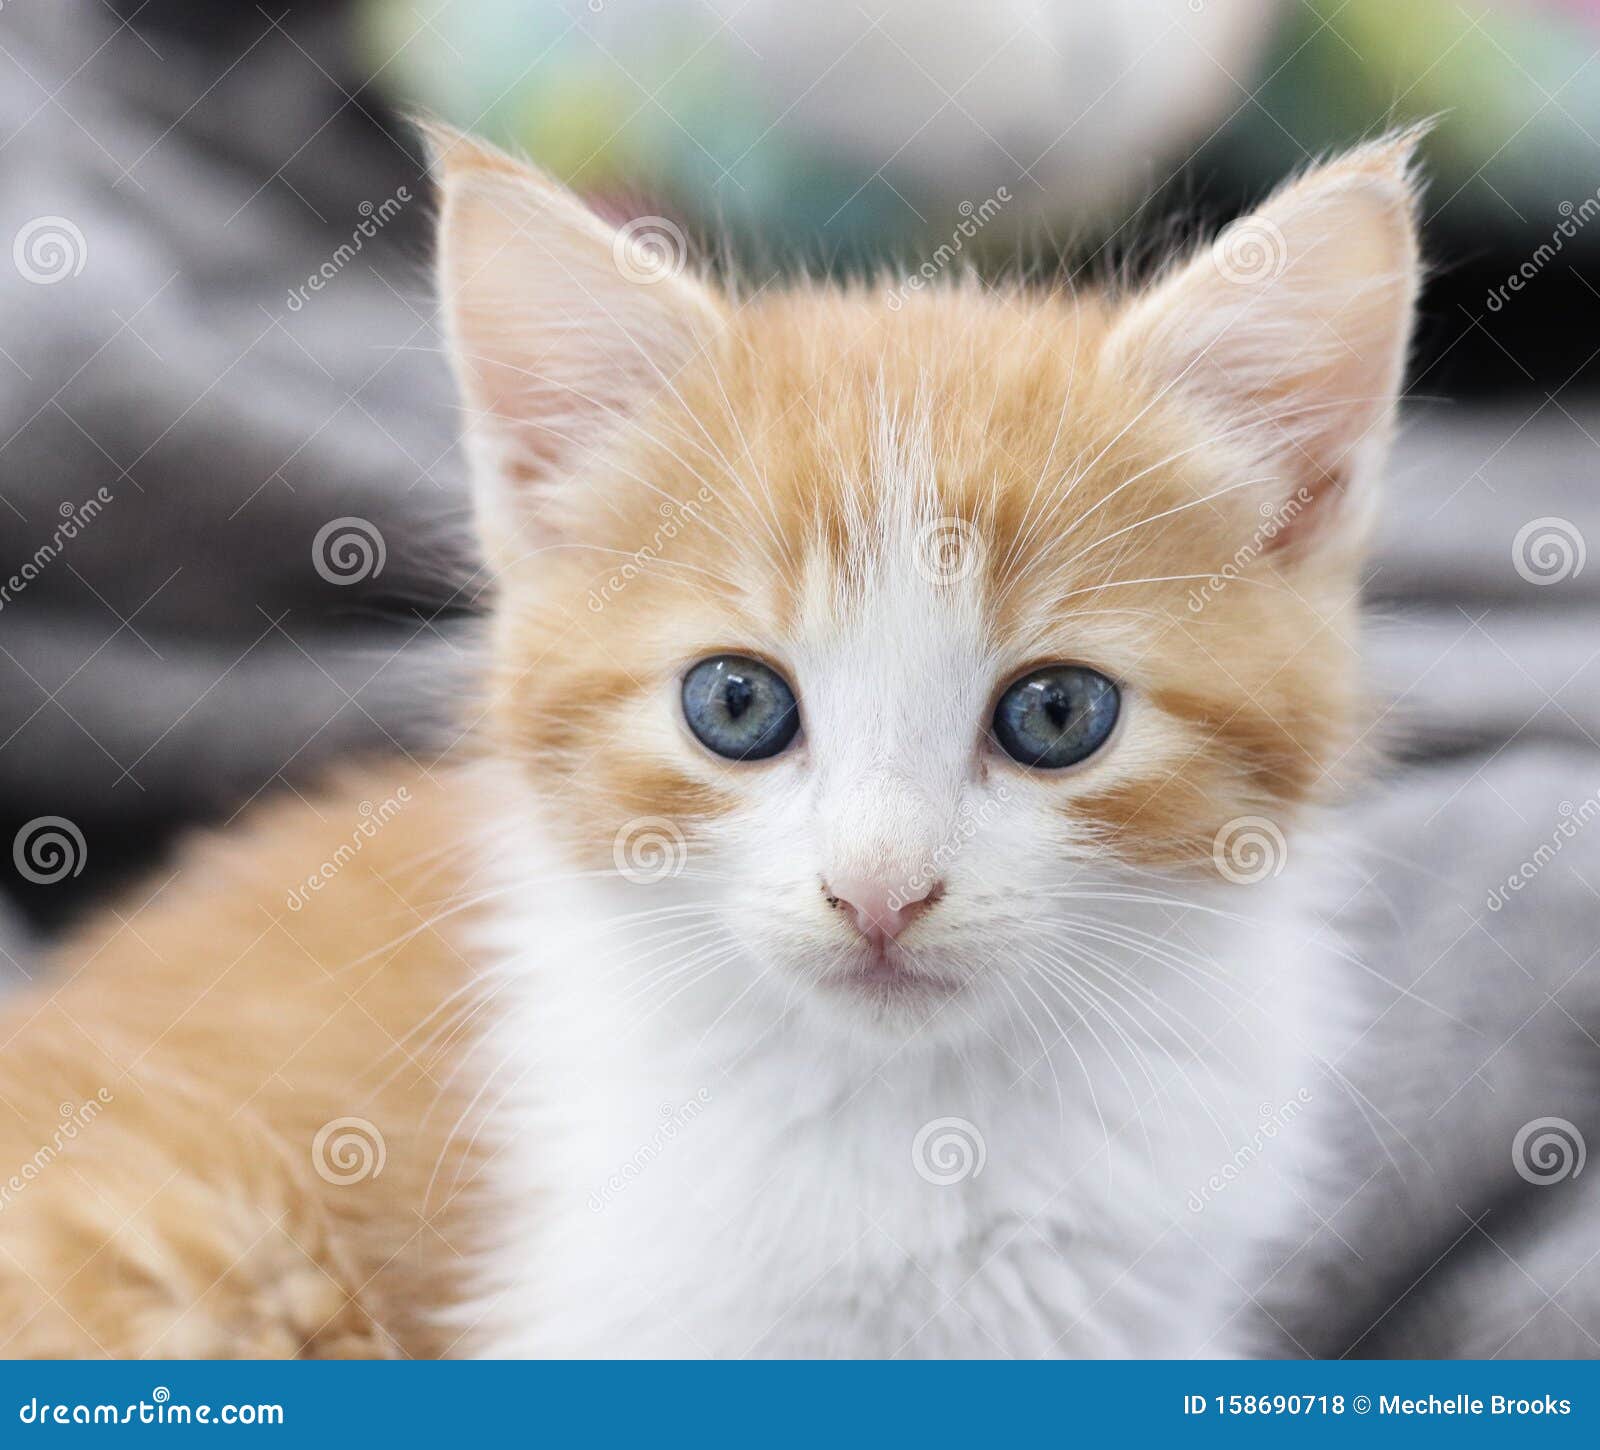 Adorable Orange And White Kitten With Blue Eyes Stock Photo Image Of Feline Cute